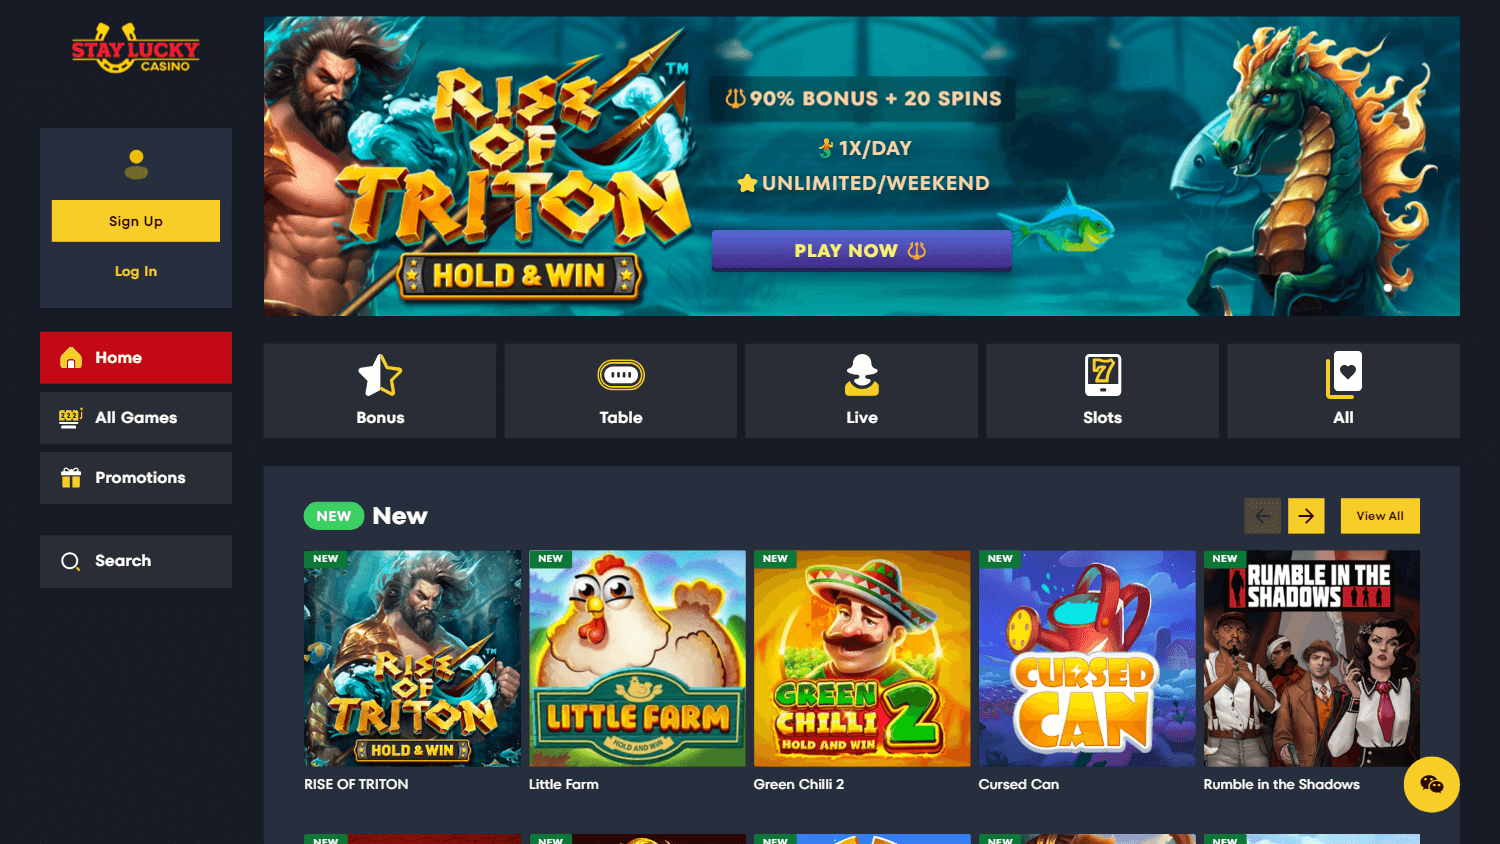 stay_lucky_casino_homepage_desktop